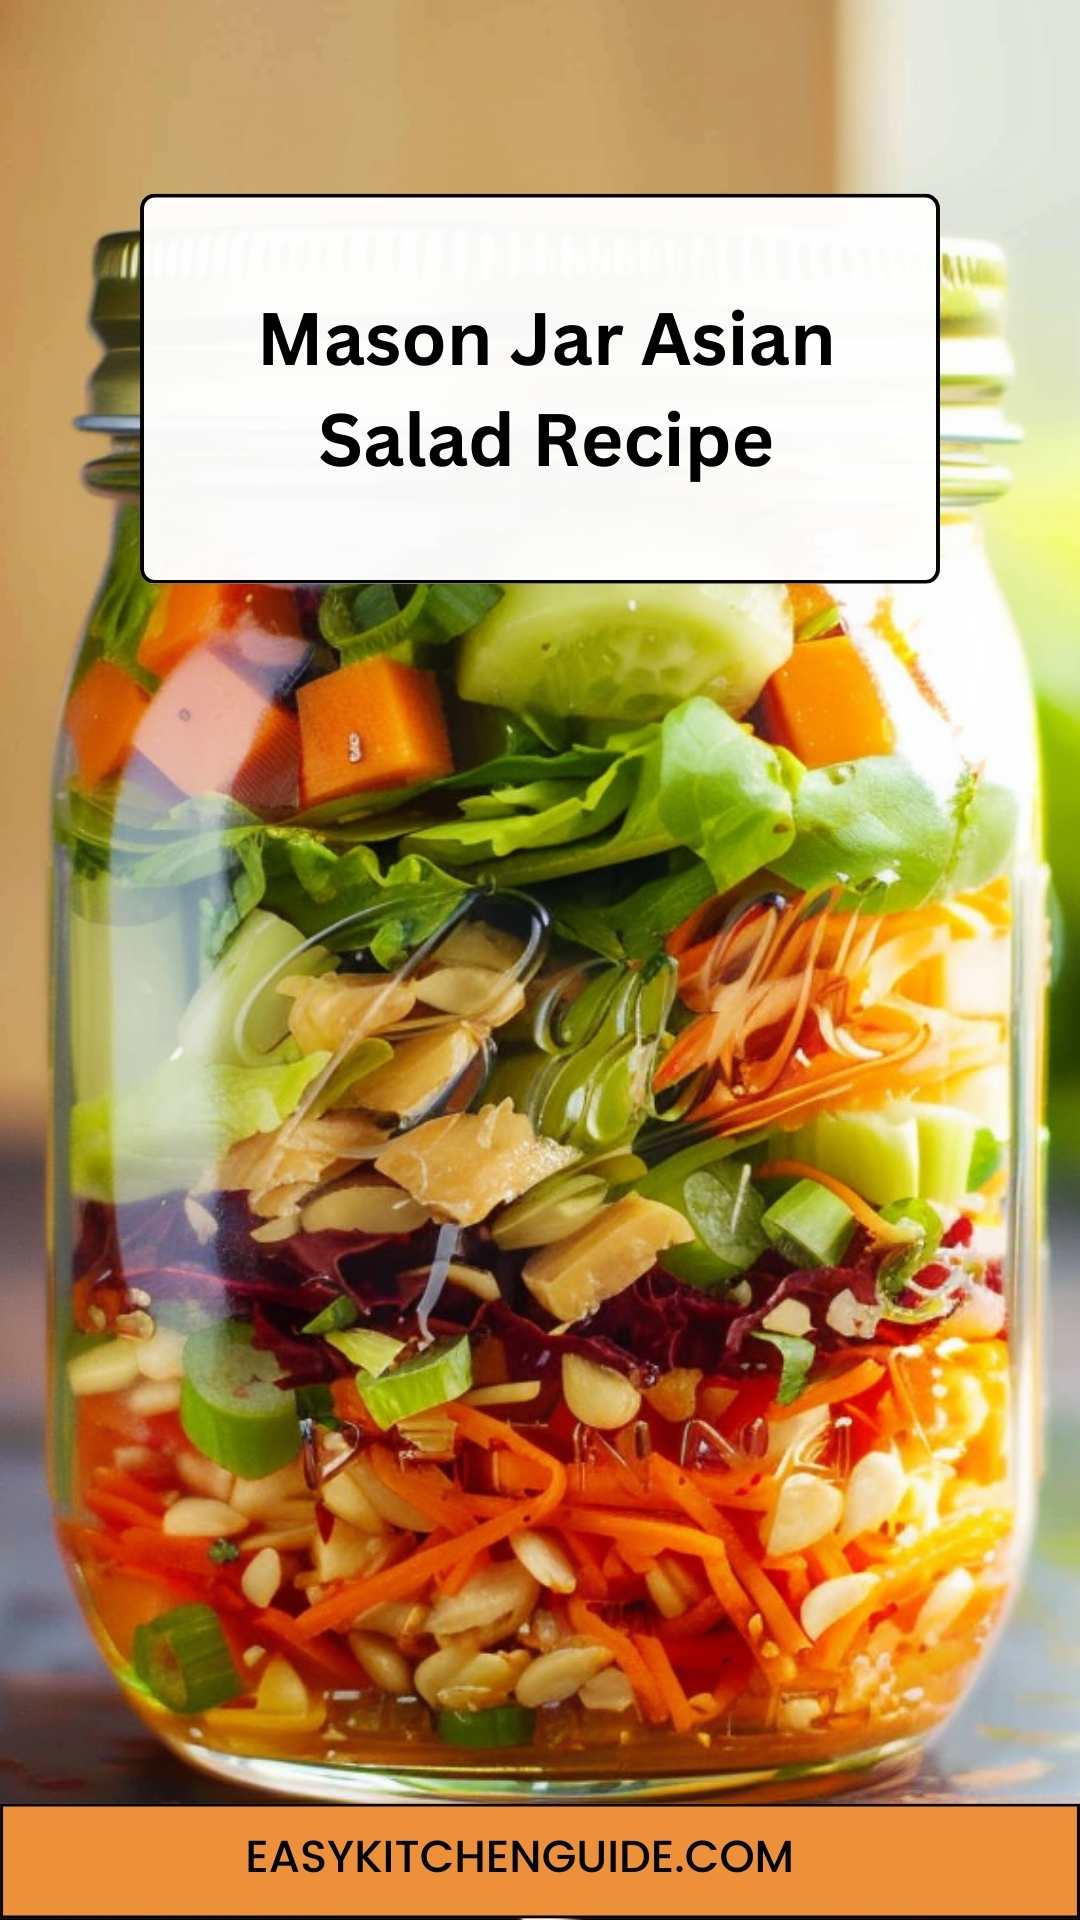 Mason Jar Asian Salad Recipe